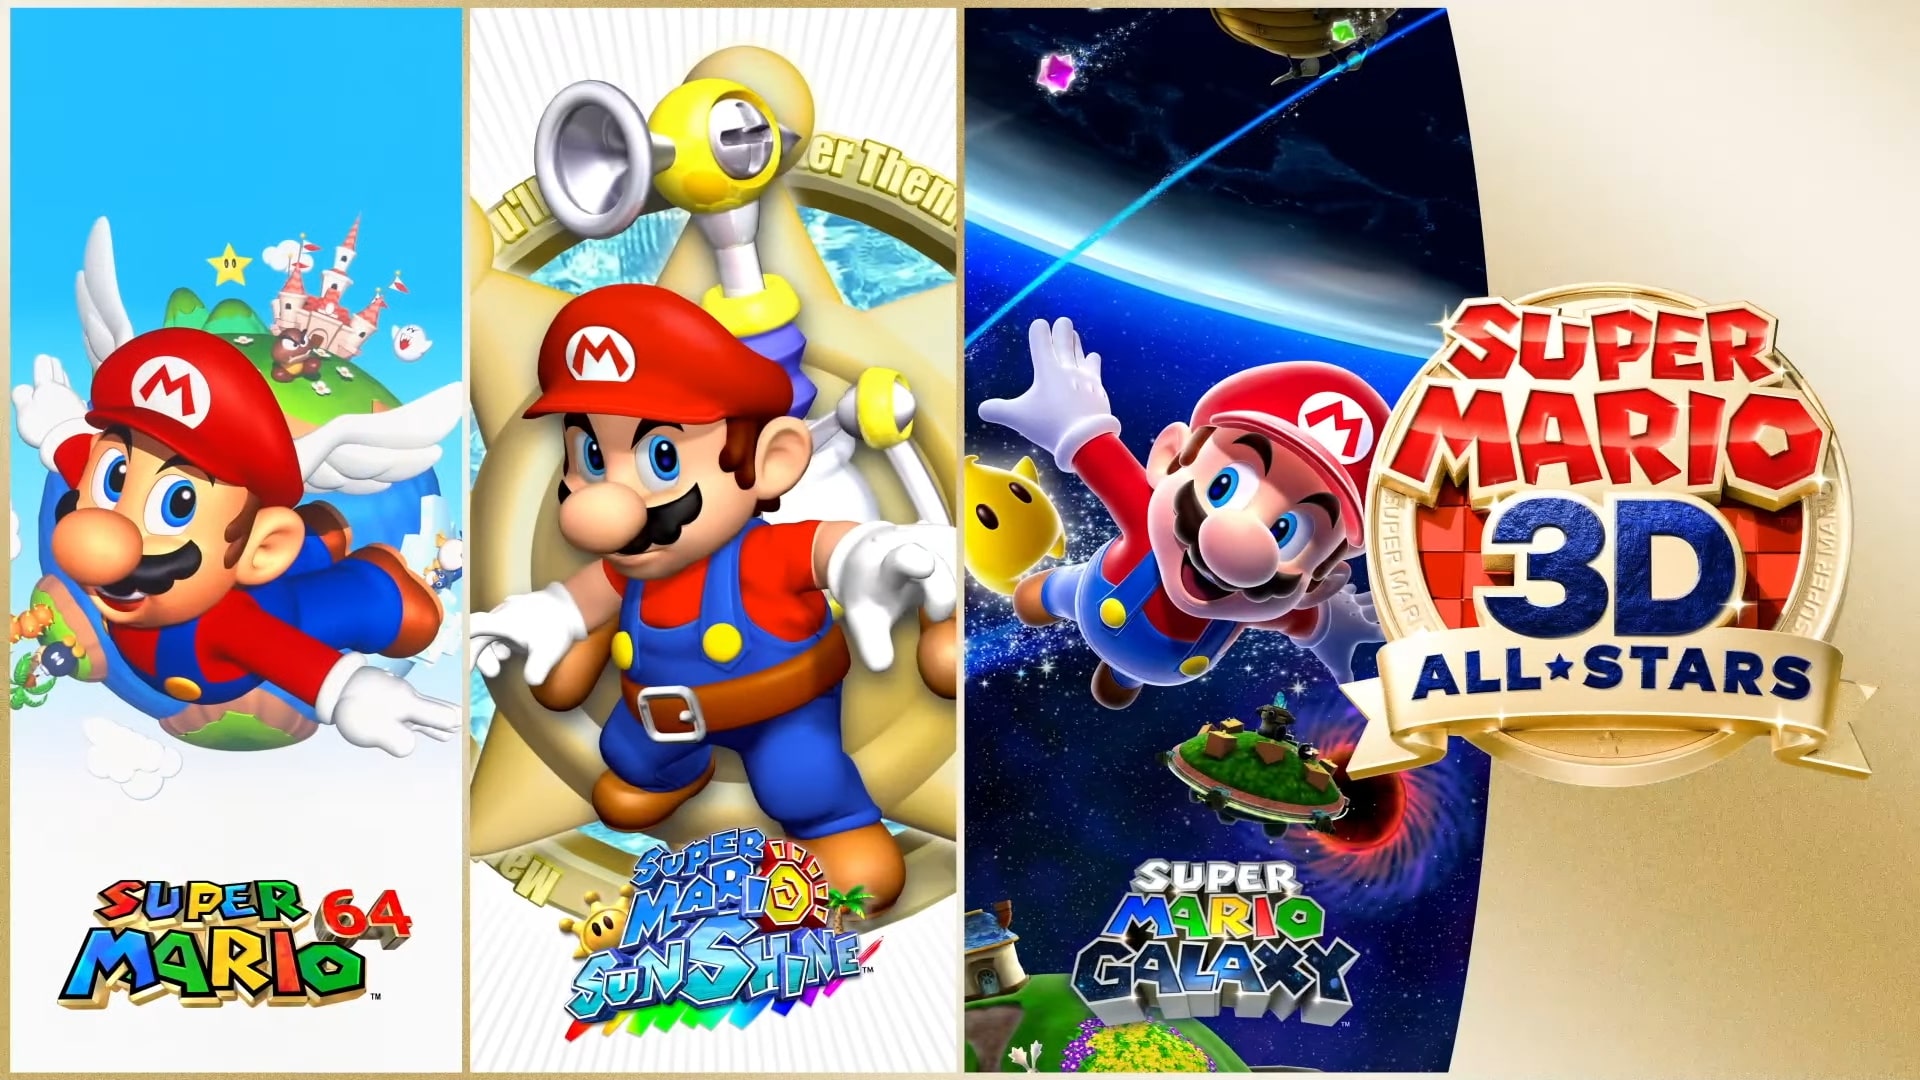 Super Mario 3D World + Bowser's Fury - Announcement Trailer